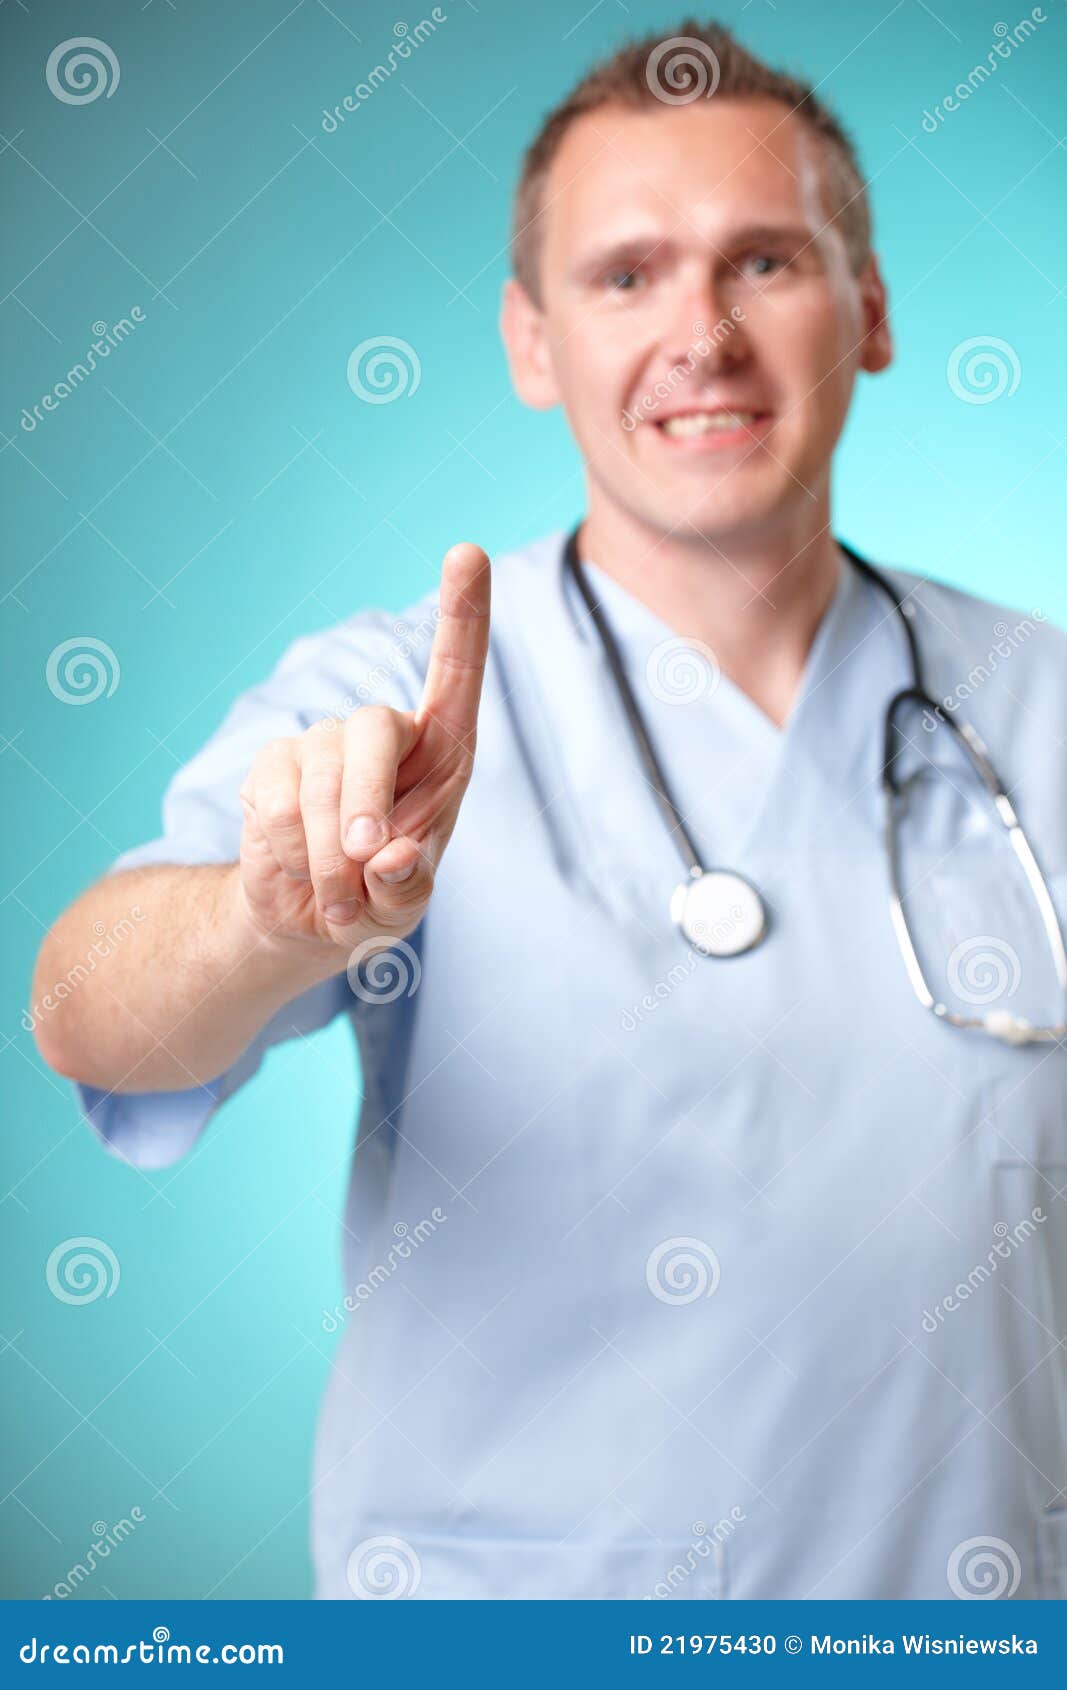 videos fingering doctor Hentai